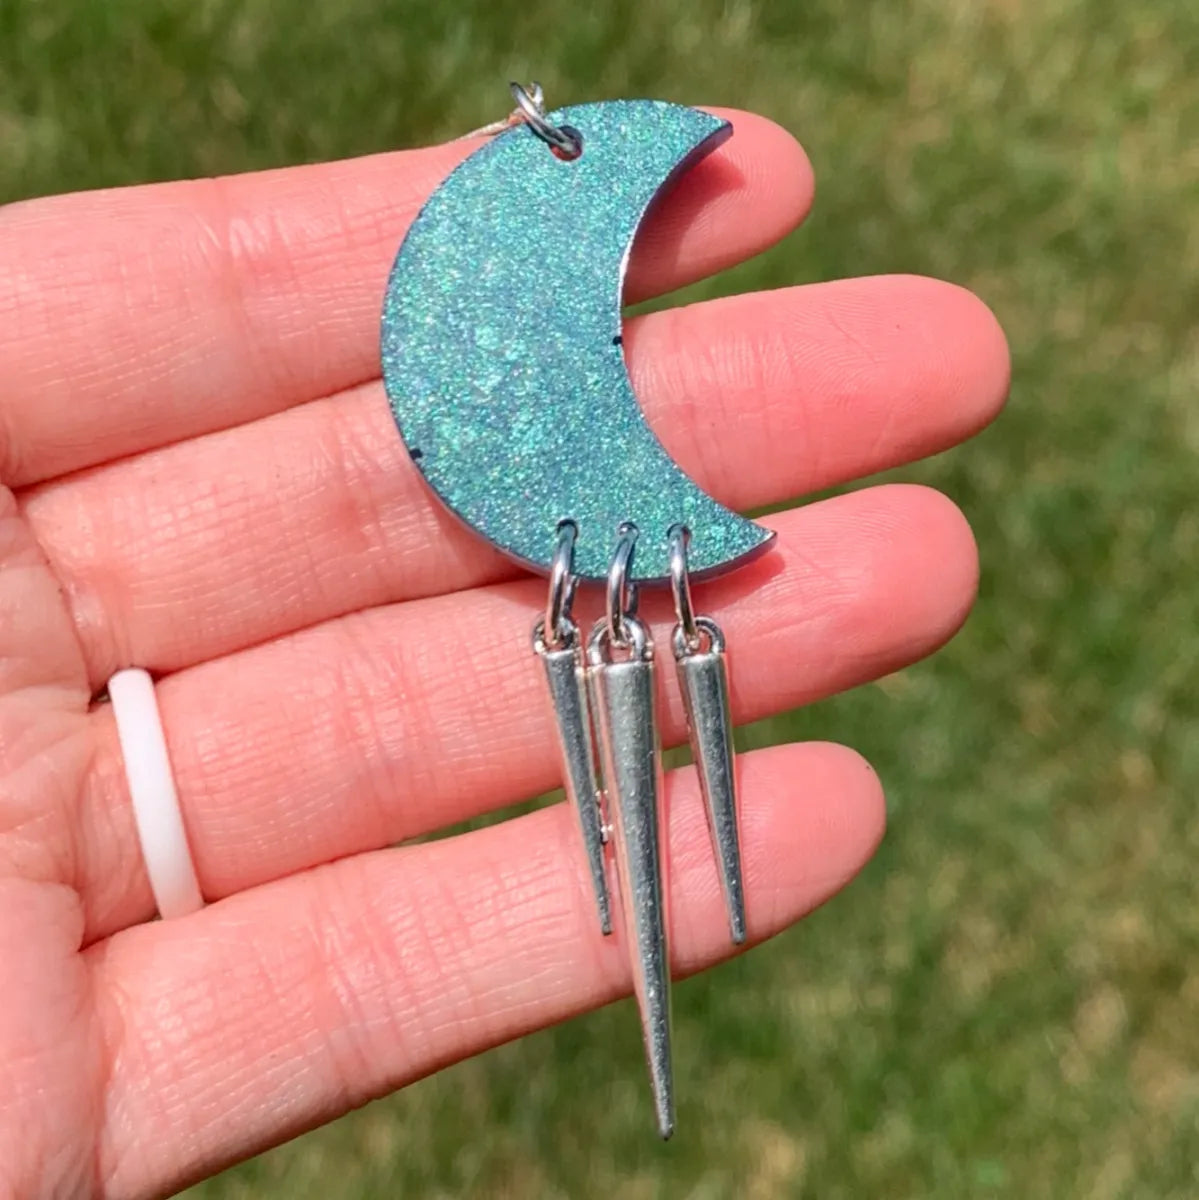 Metallic Green Moon Earrings with Spikes